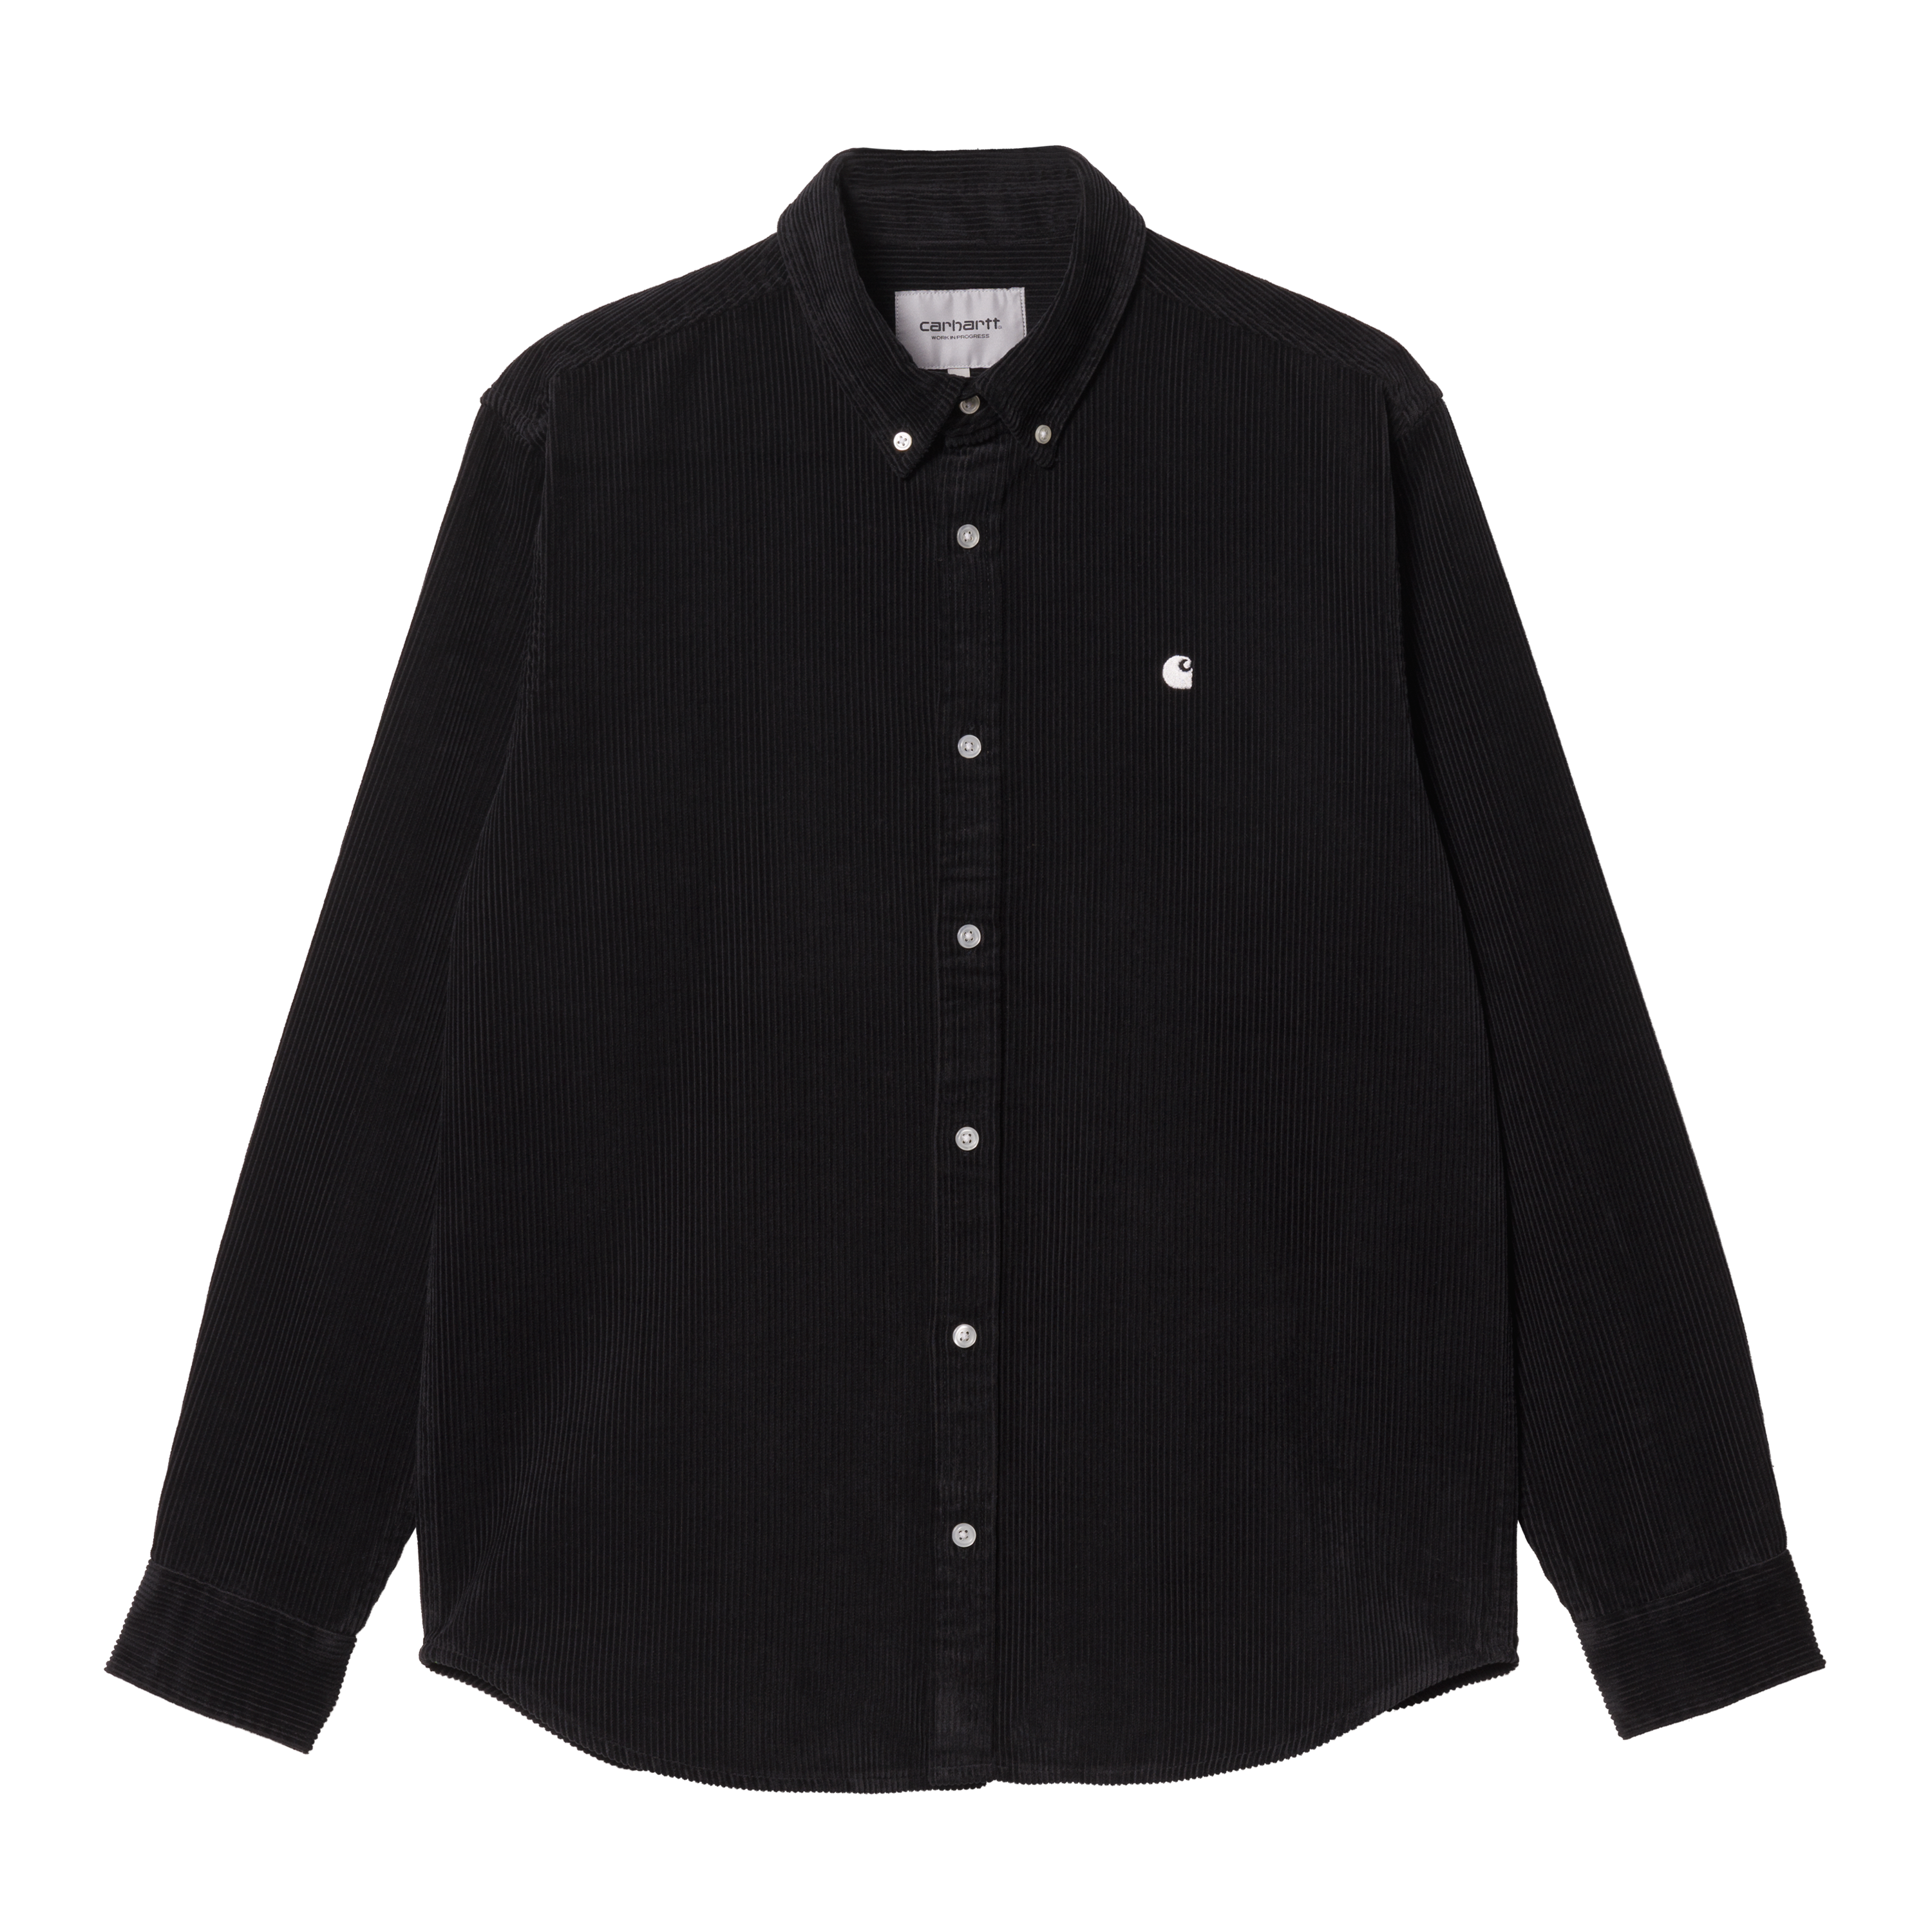 Carhartt WIP Long Sleeve Madison Cord Shirt in Schwarz